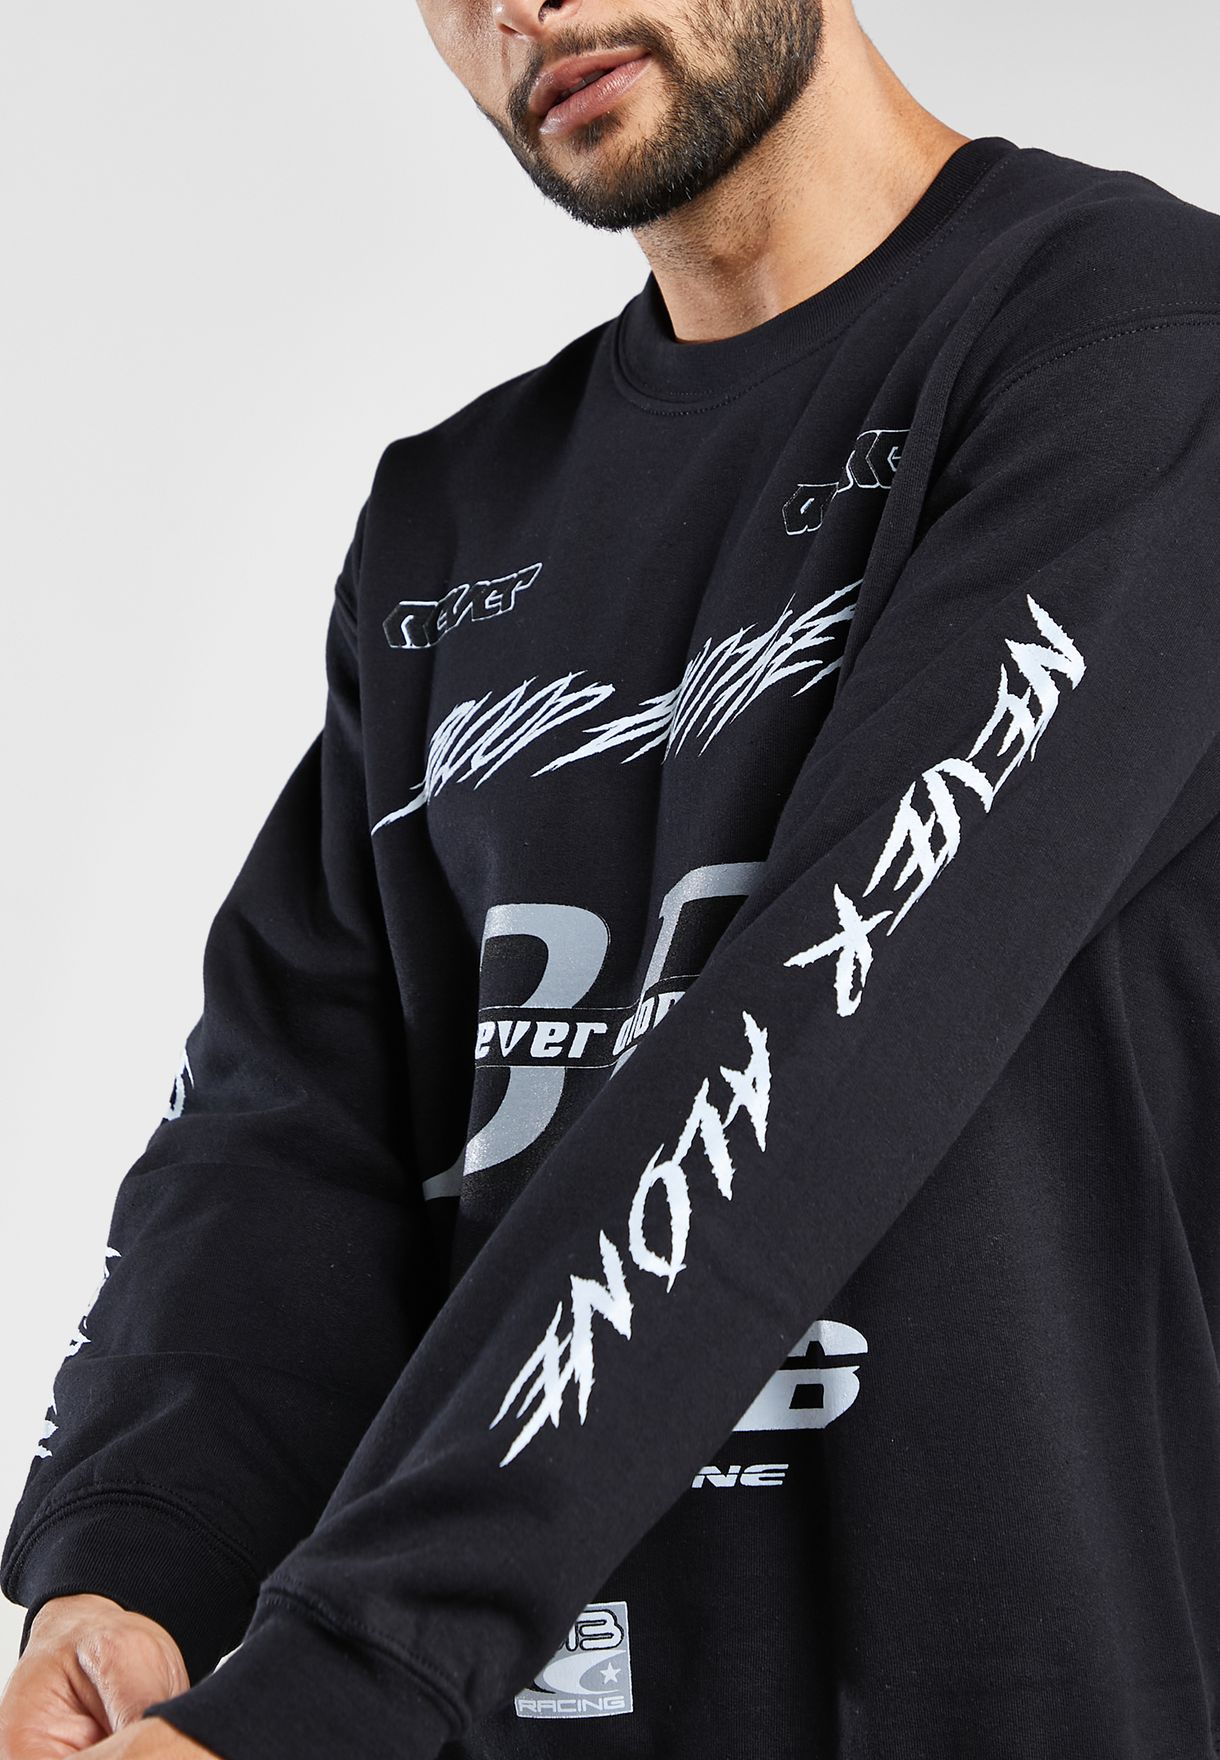 Racing Branded Sweatshirt